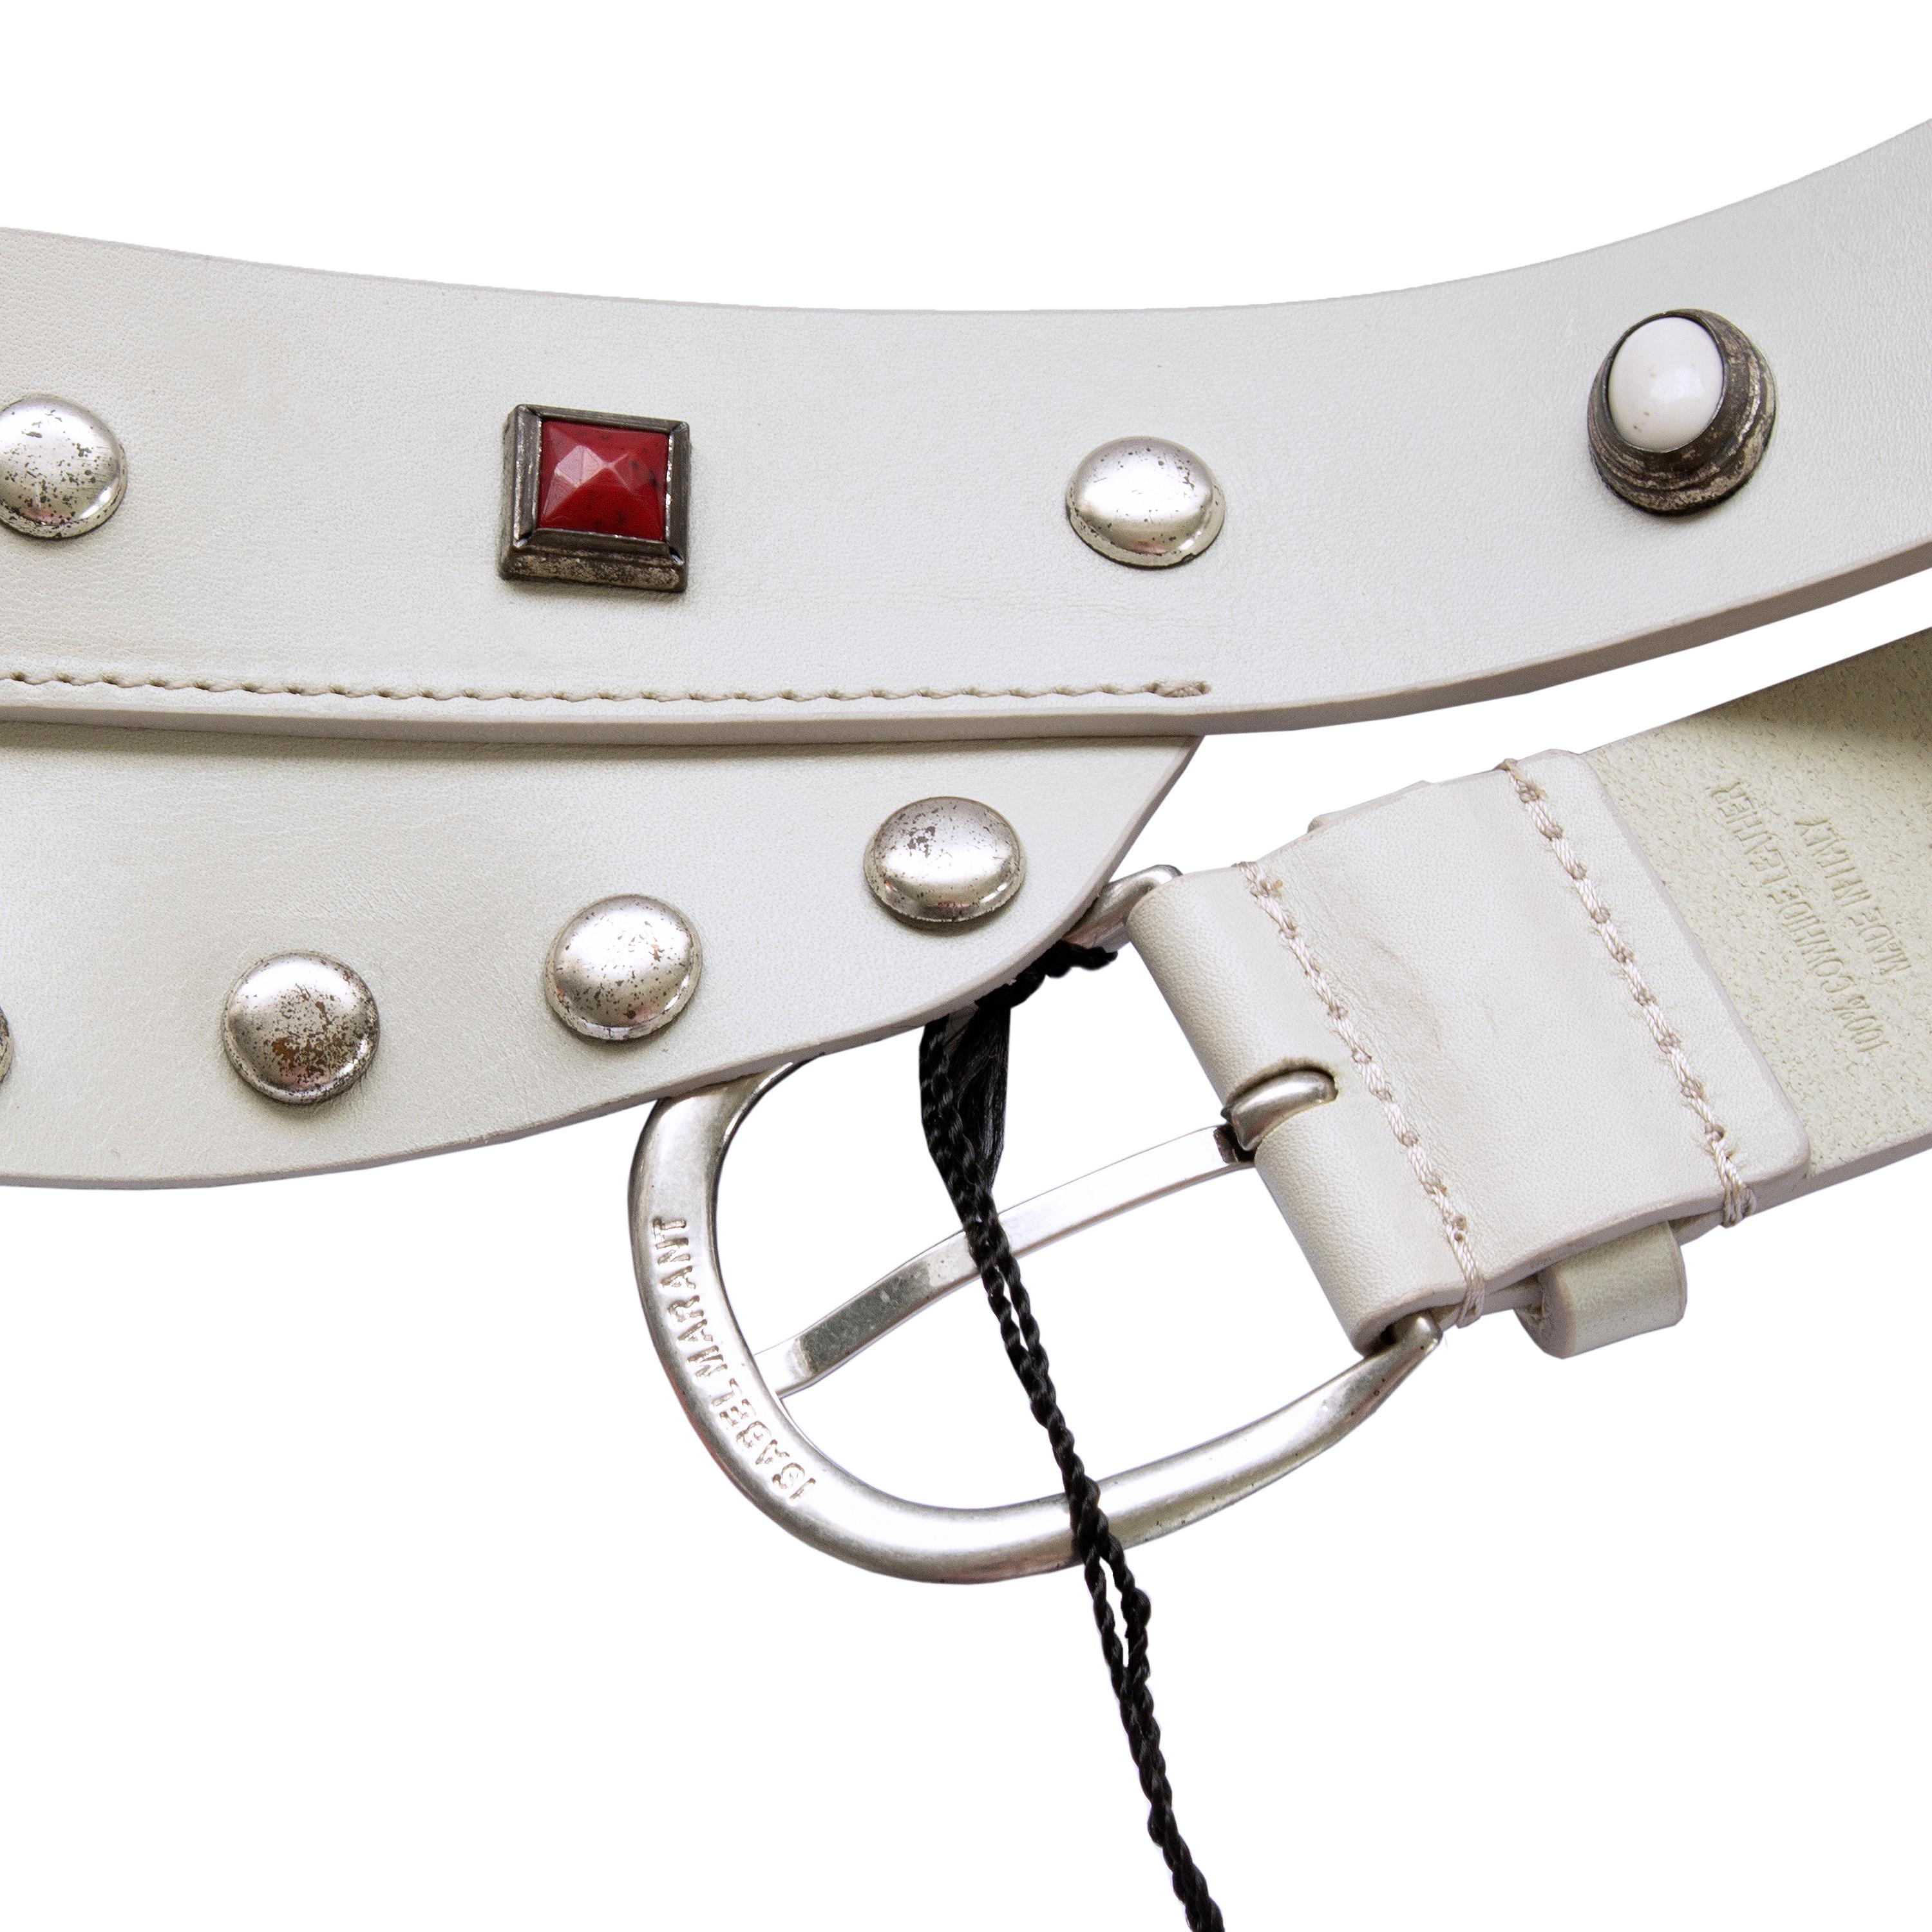 Isabel Marant Belt - Leather + Stud Detailing - Red & White Beading For Sale 3